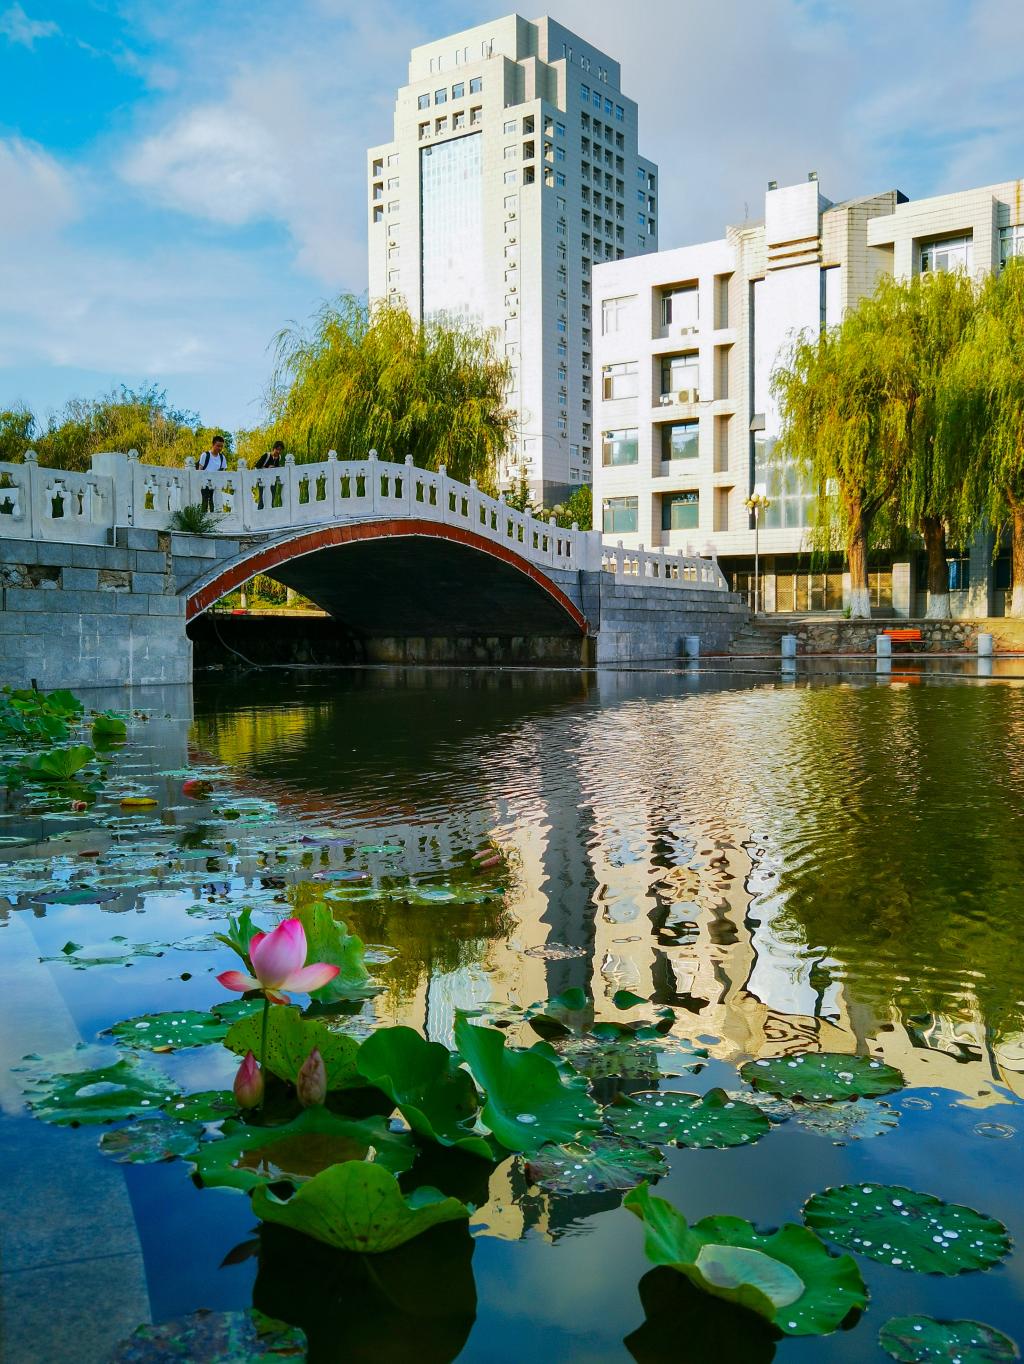 Yanshan University bridge over pond and lily pads